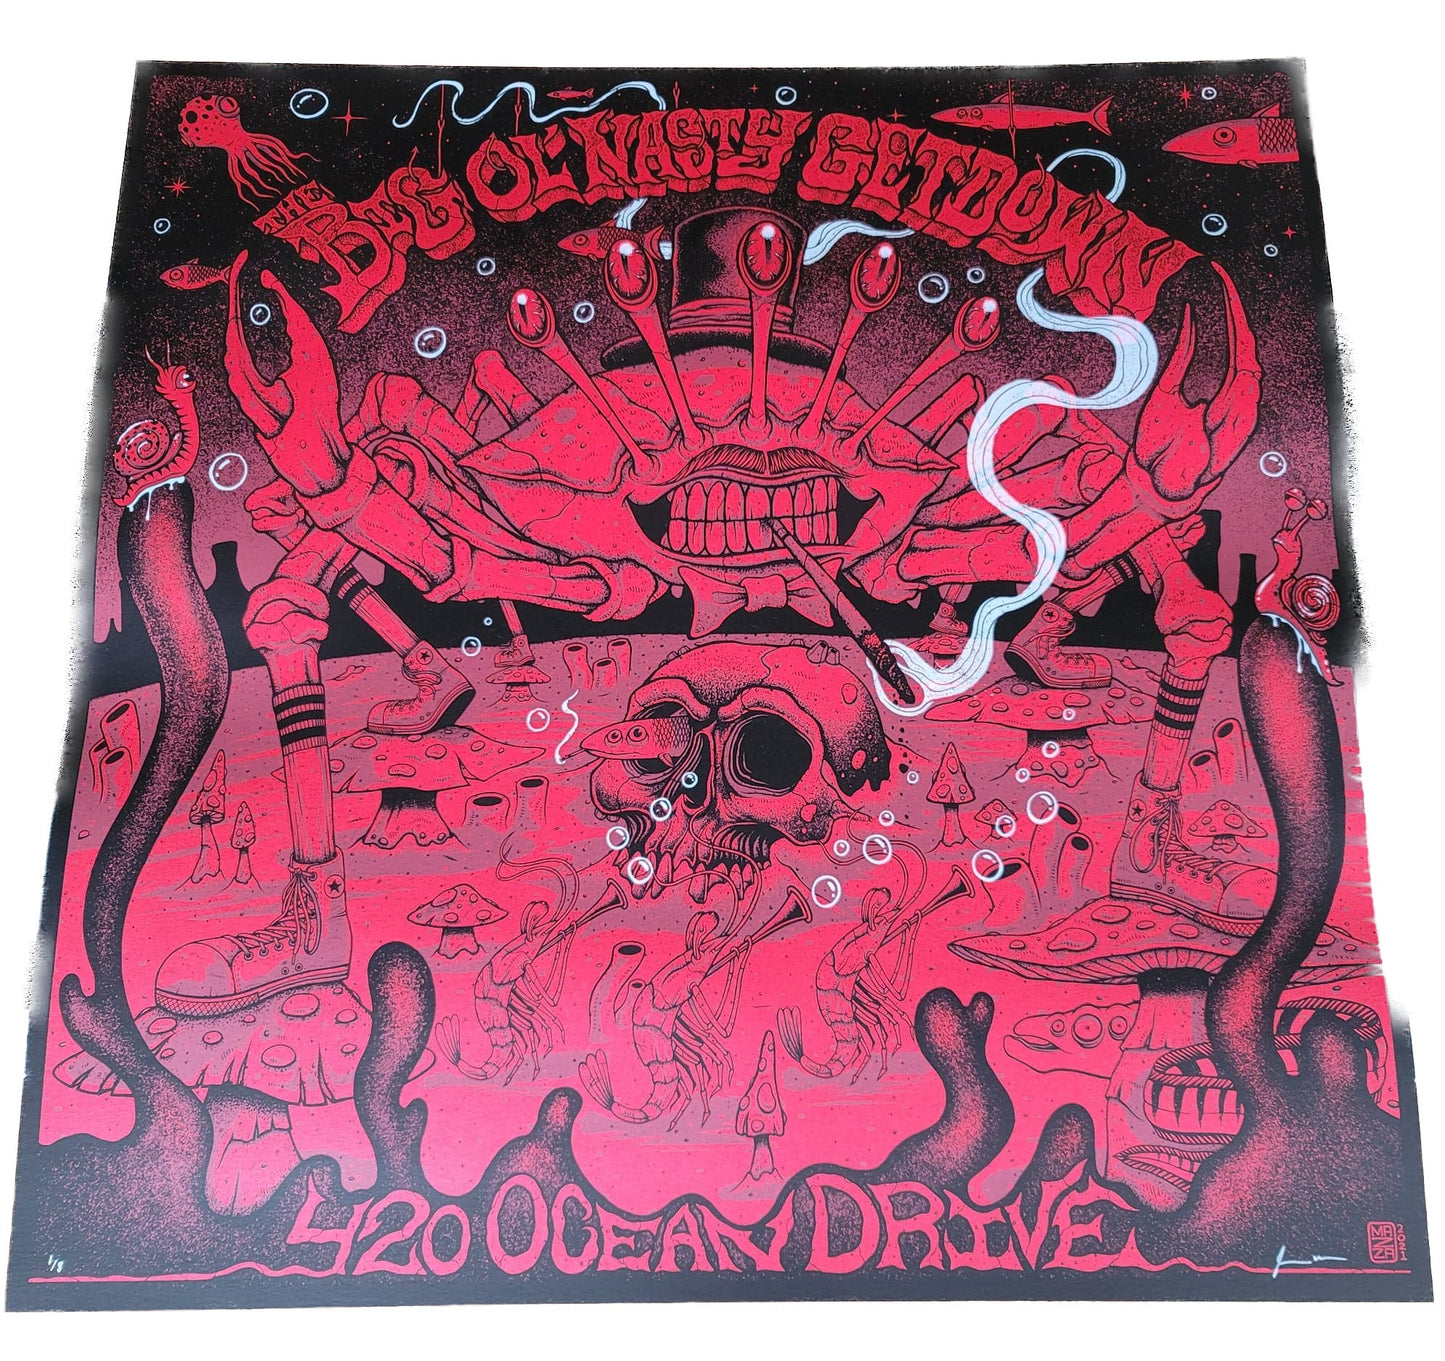 Big Ol' Nasty Getdown x Jim Mazza - 420 Ocean Drive-  24"x 24" Limited Edition Print